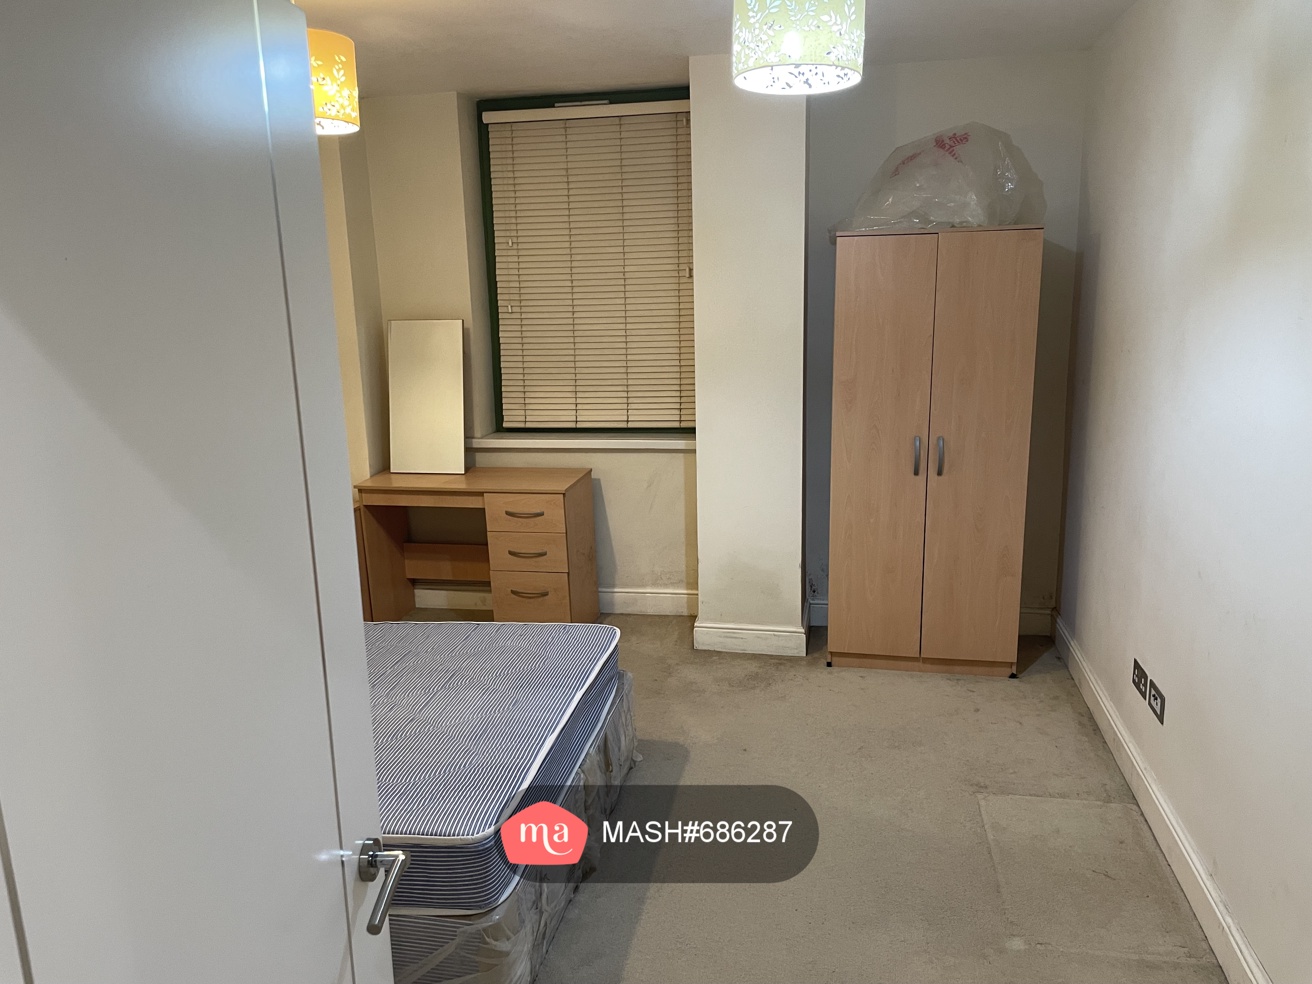 2 Bedroom Flat to rent in Hounslow - Mashroom